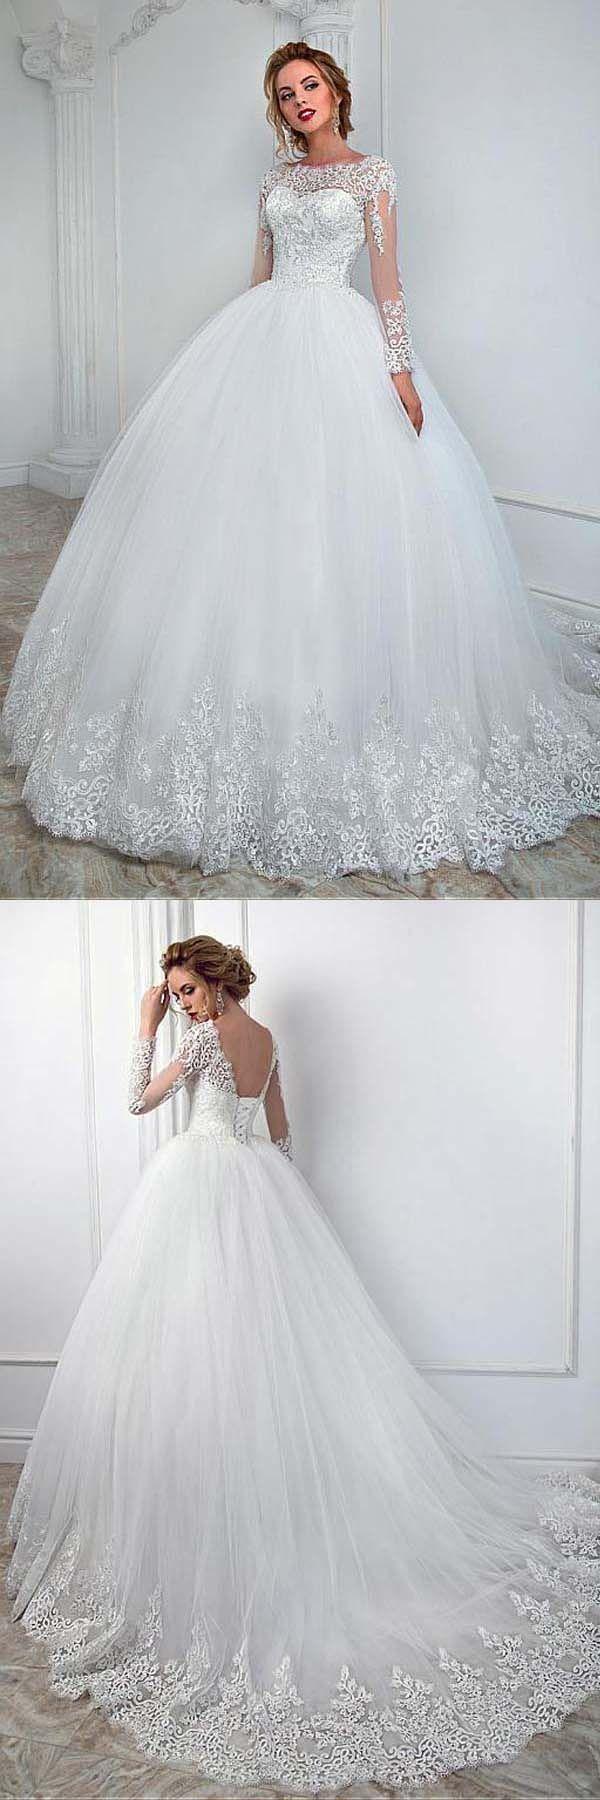 زفاف - Elegant Bateau Neckline Ball Gown Wedding Dress With Lace Appliques WD193